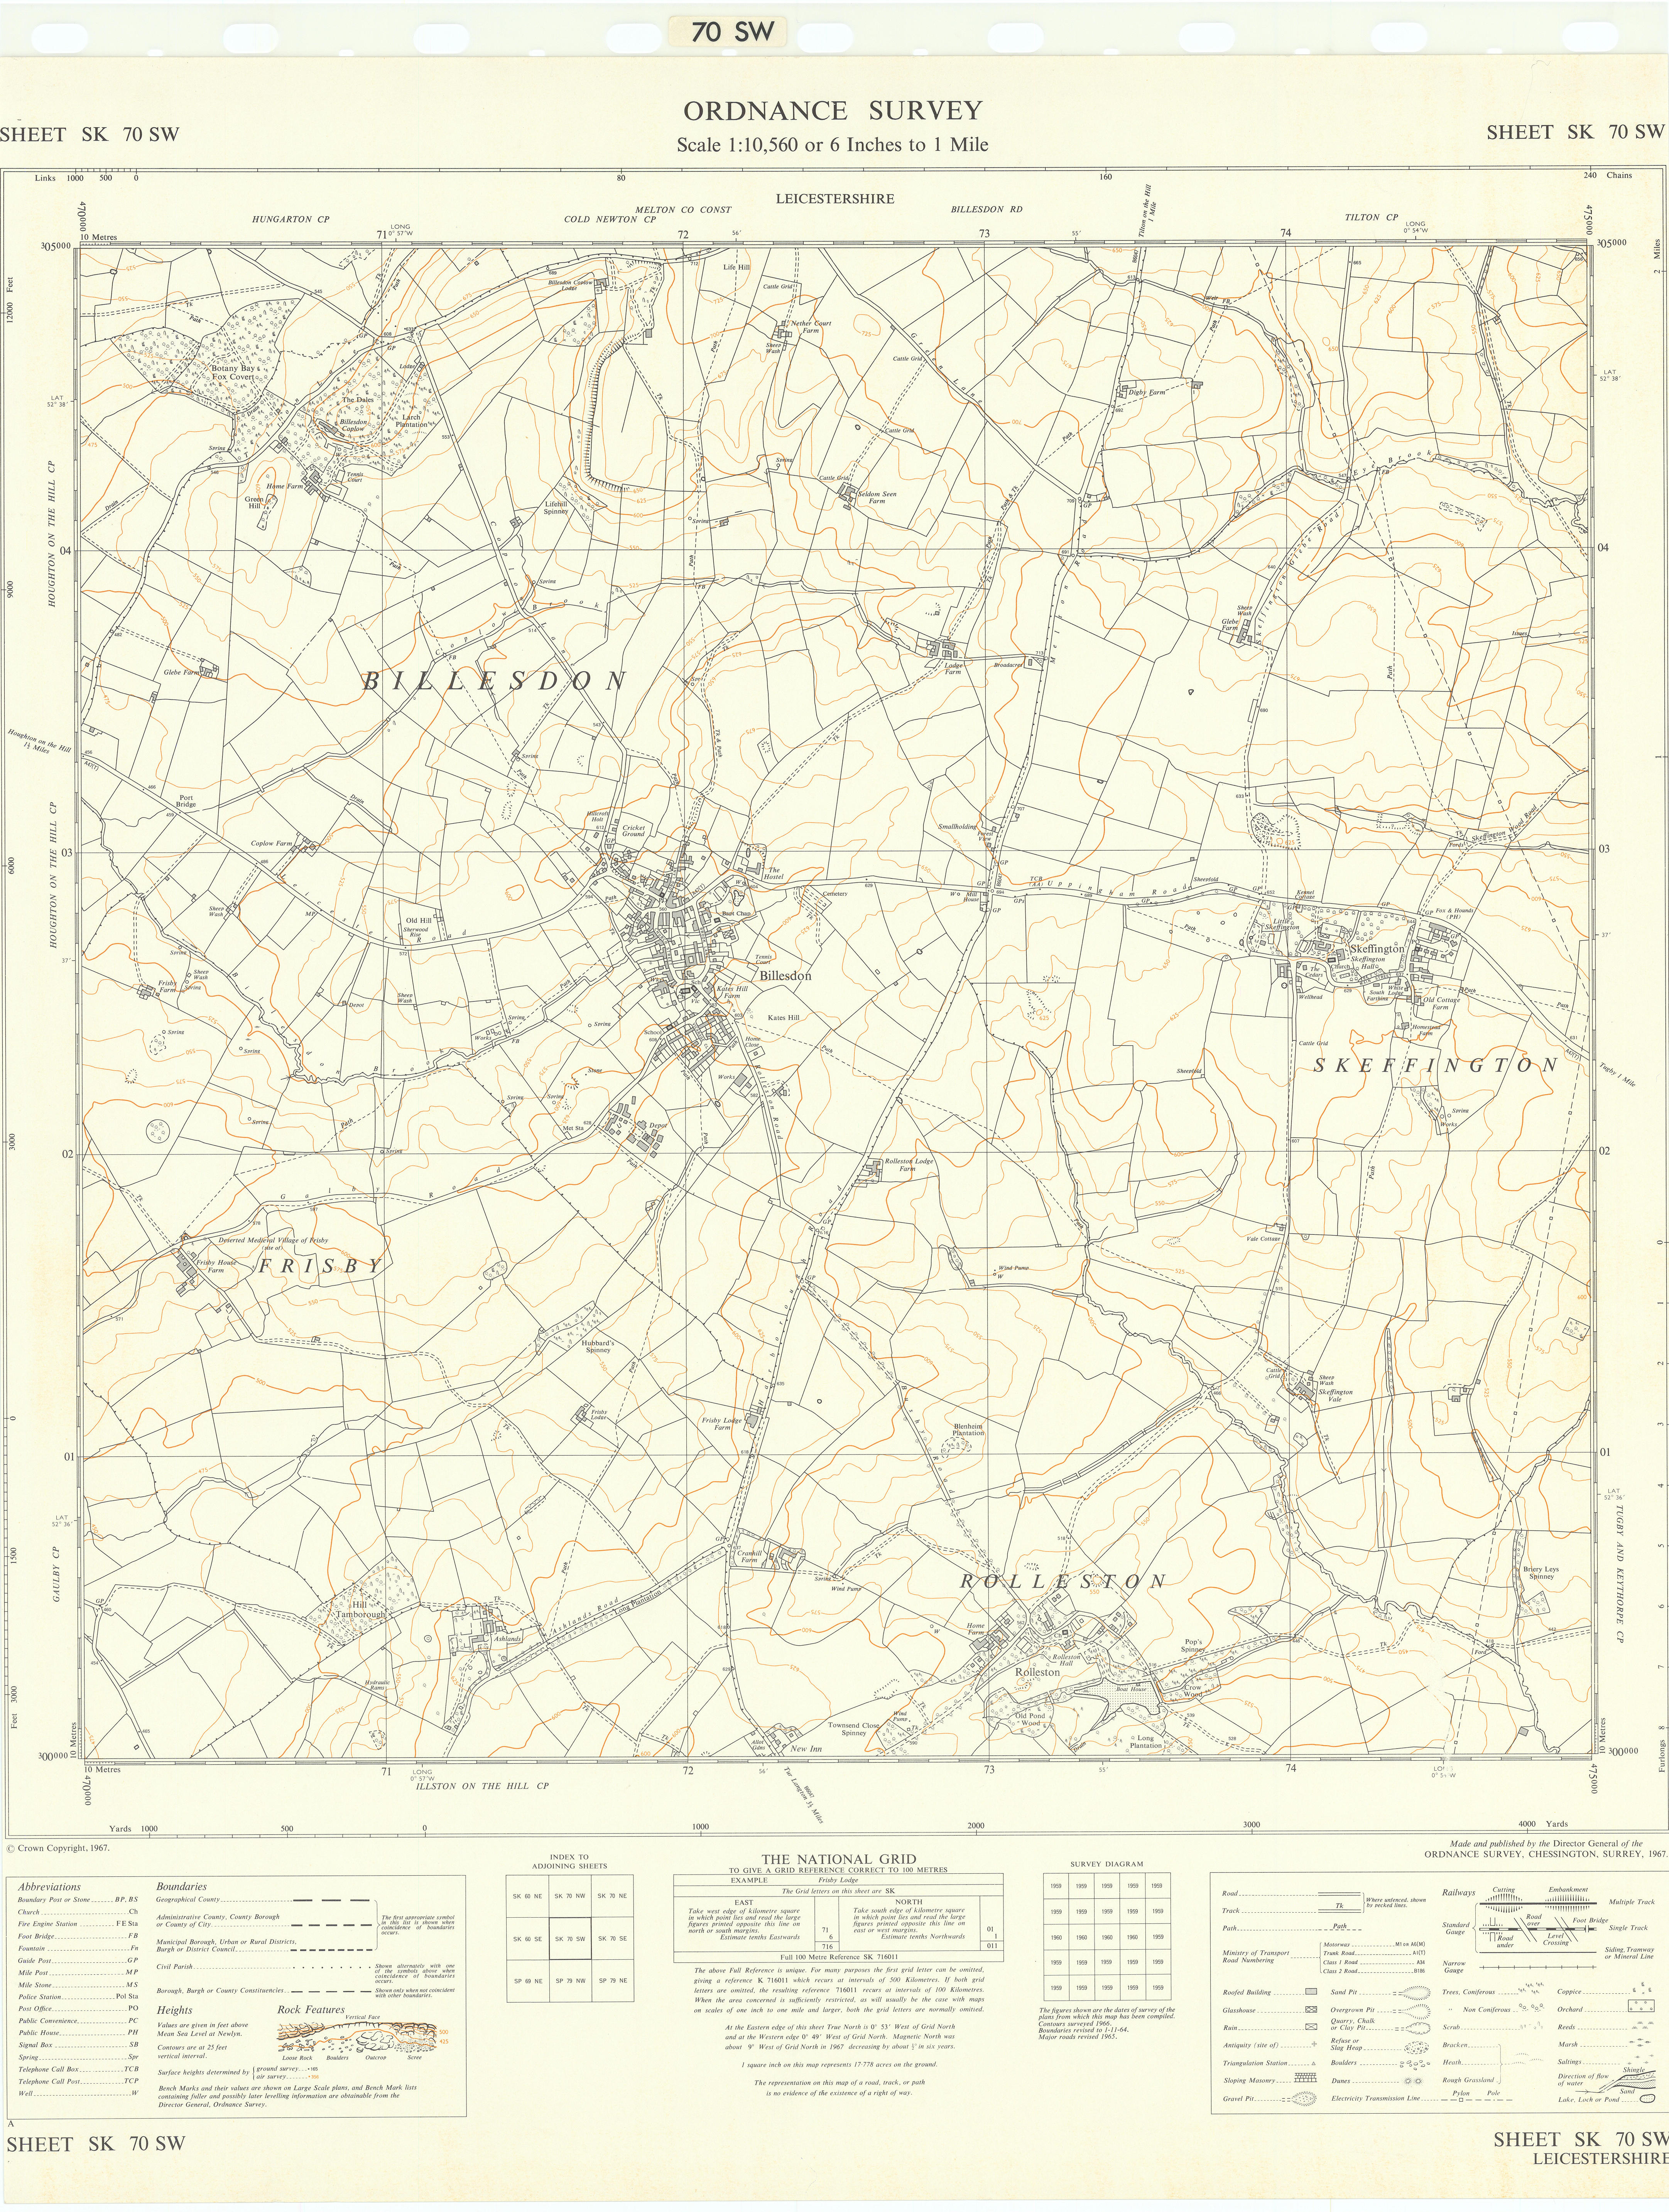 Ordnance Survey SK70SW Leicestershire Billesdon Skeffington Rolleston 1967 map